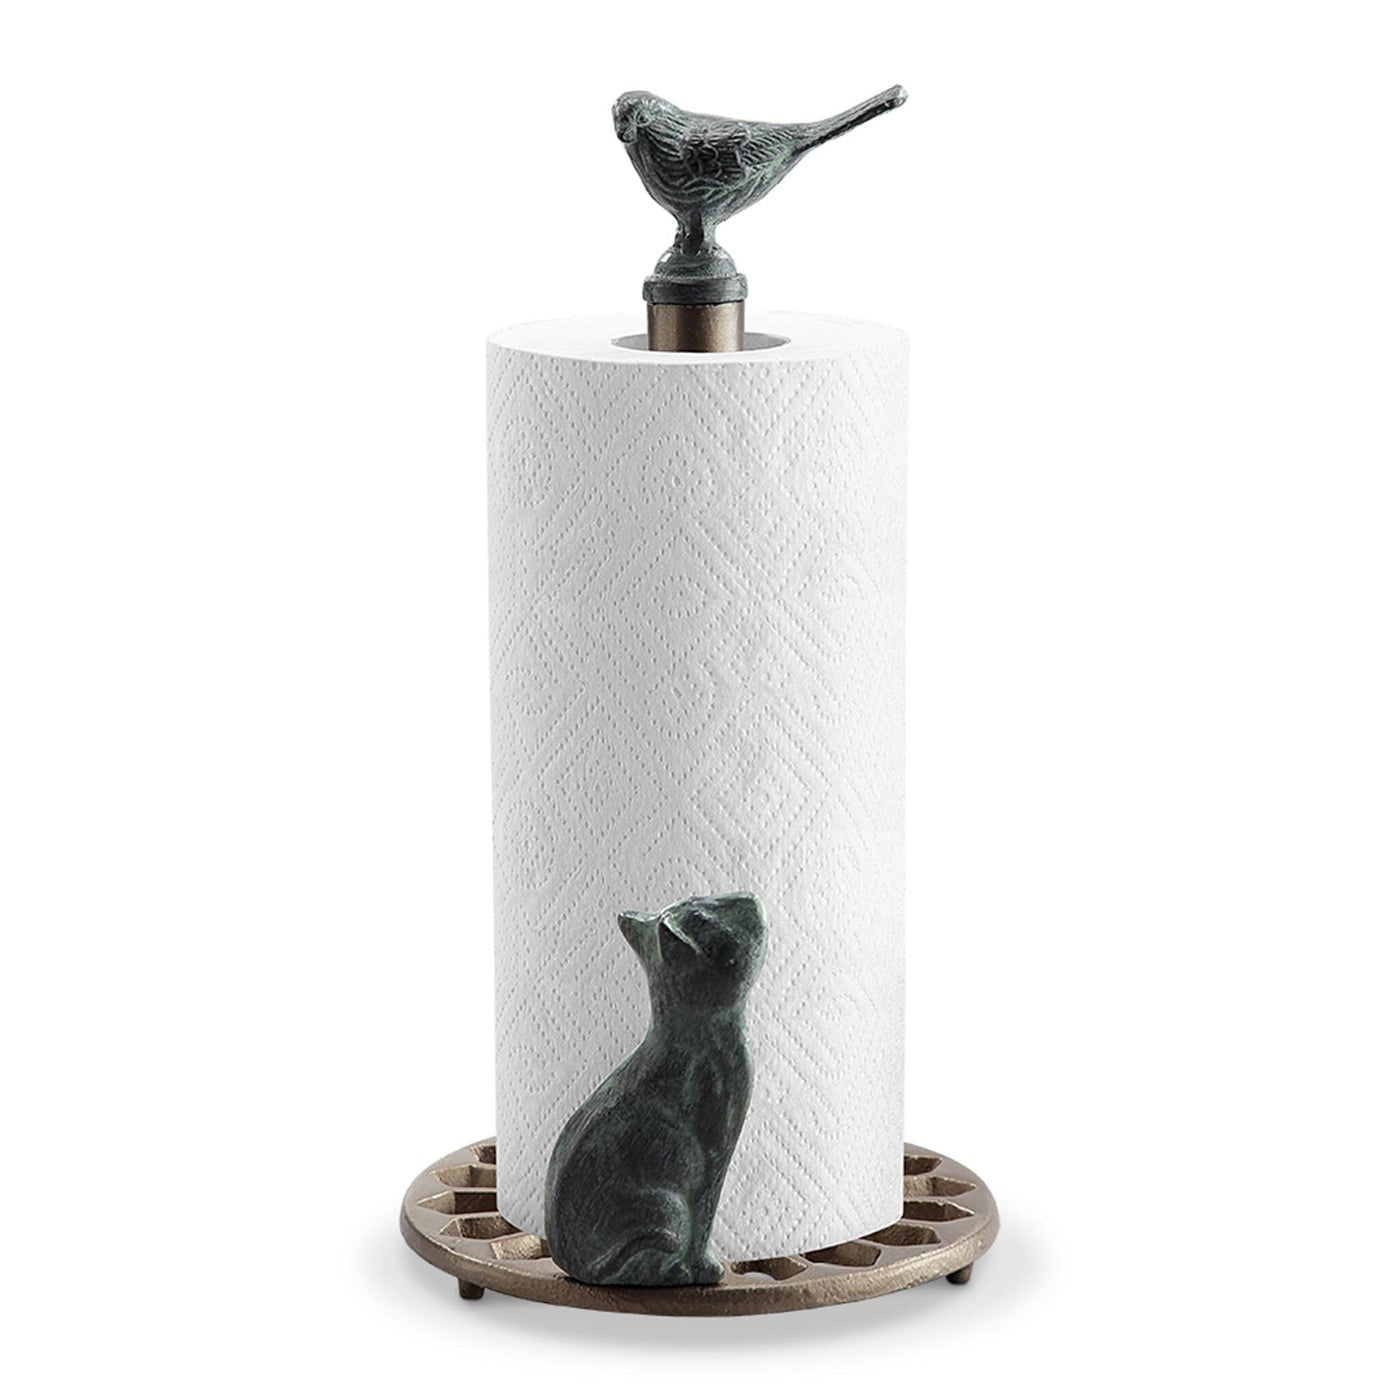 Cat and Bird Paper Towel Holder